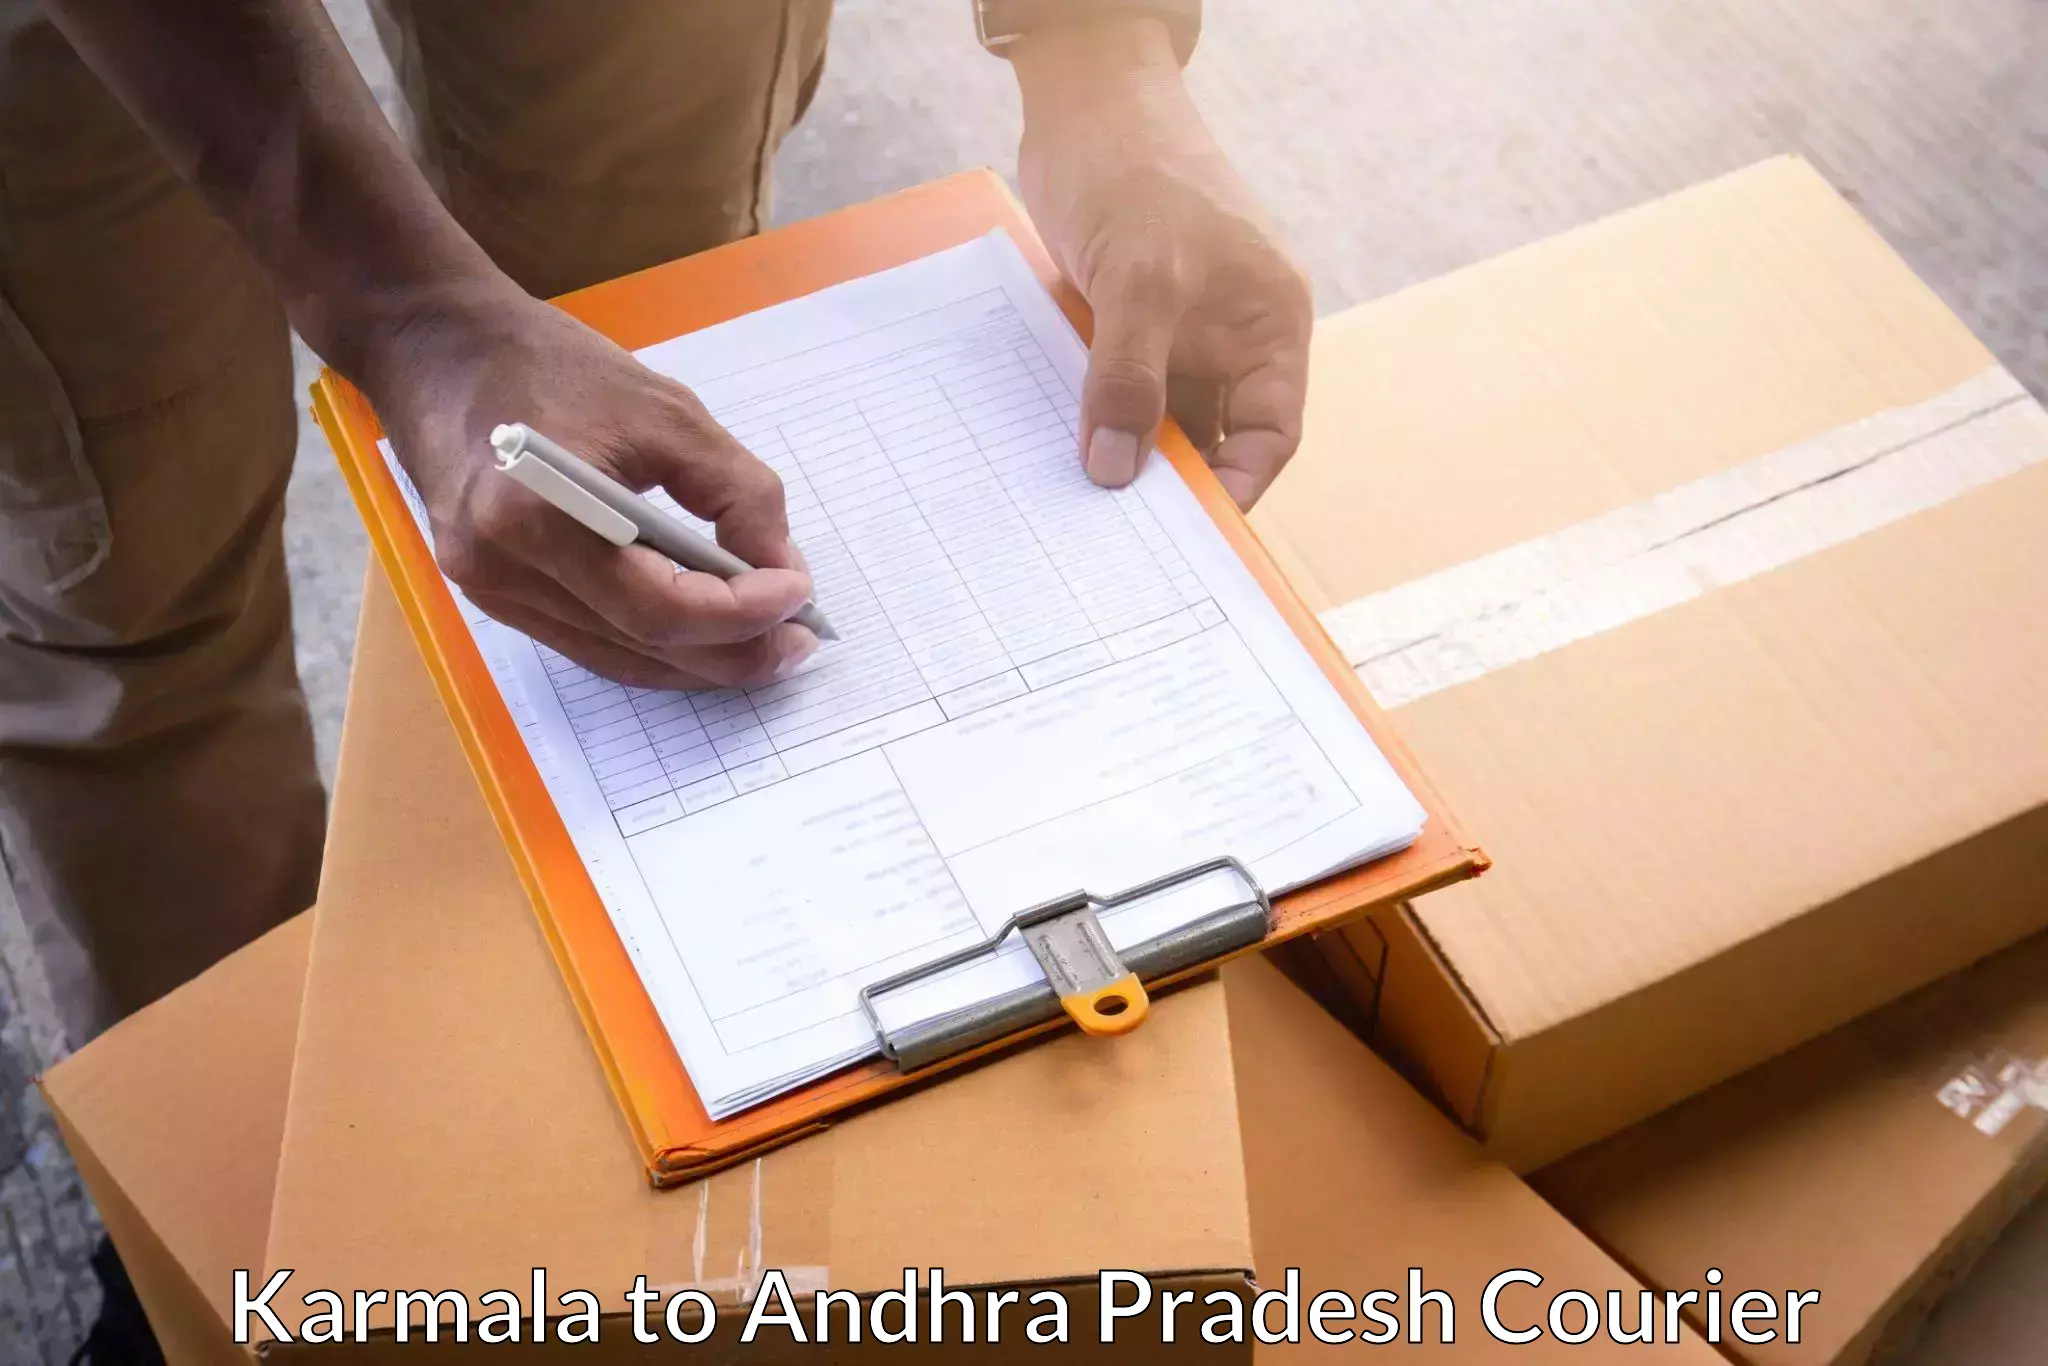 Global courier networks Karmala to Andhra Pradesh